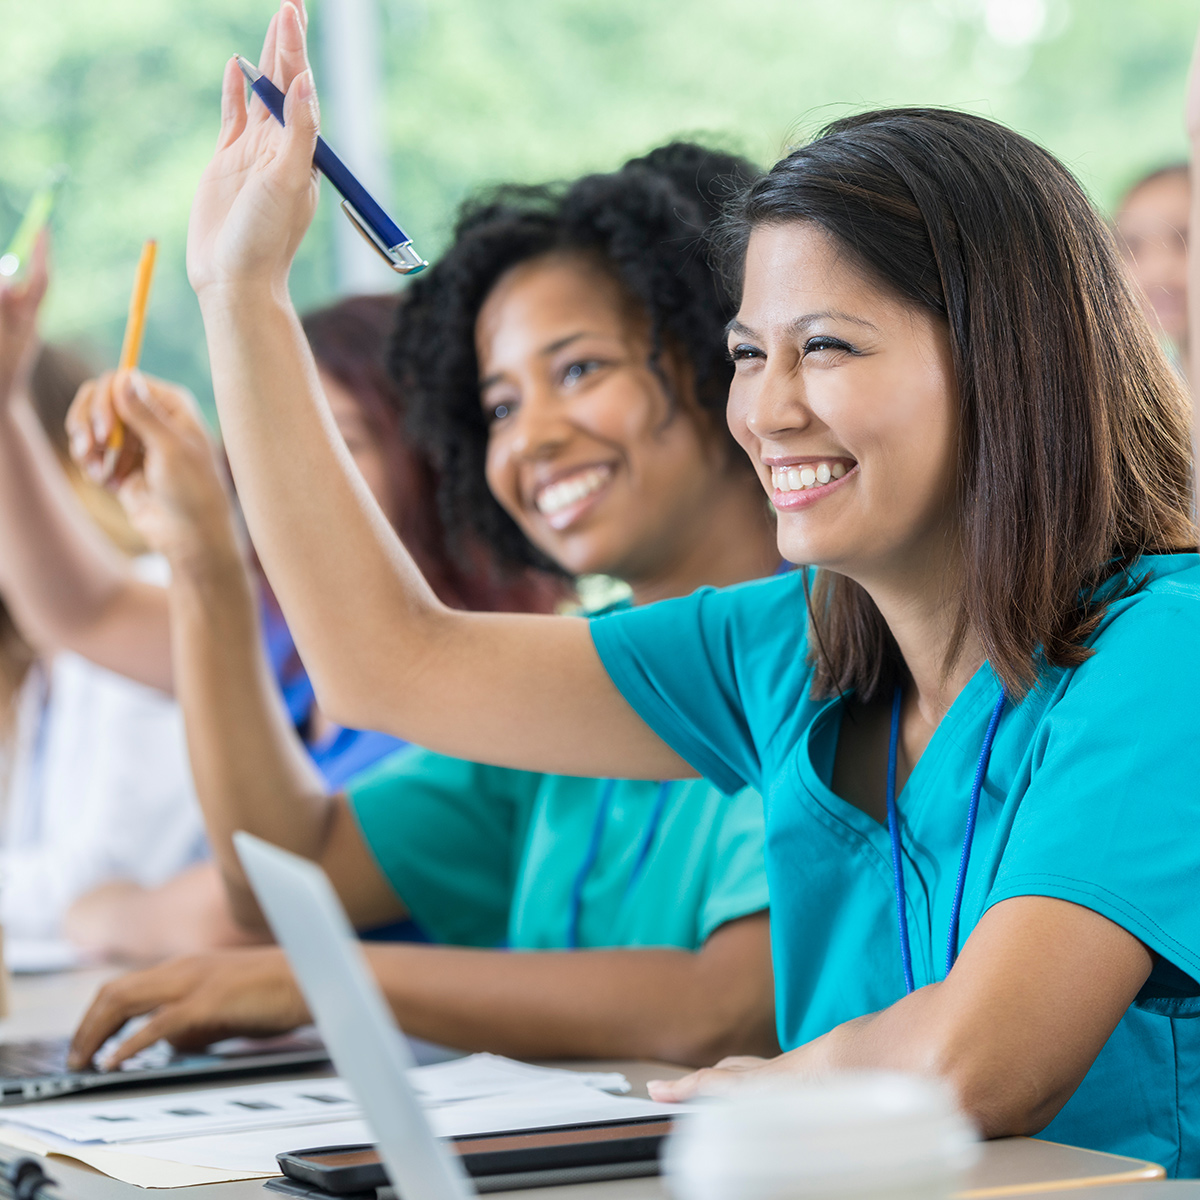 smiling women in scrubs in classroom setting, raising hands